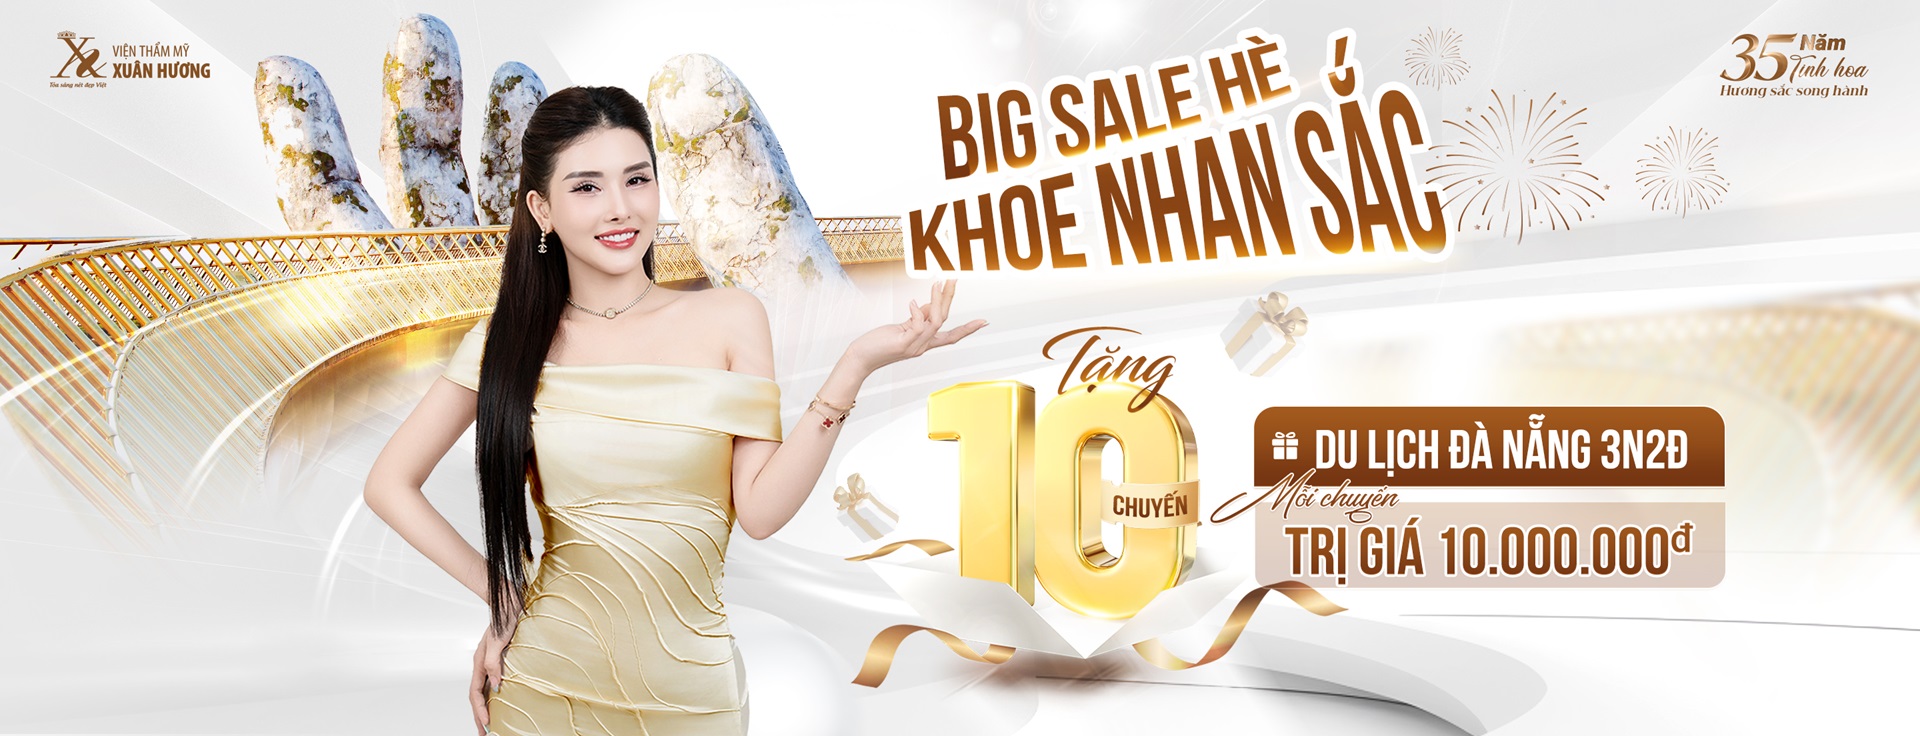 Big Sale Hè - Khoe Nhan Sắc